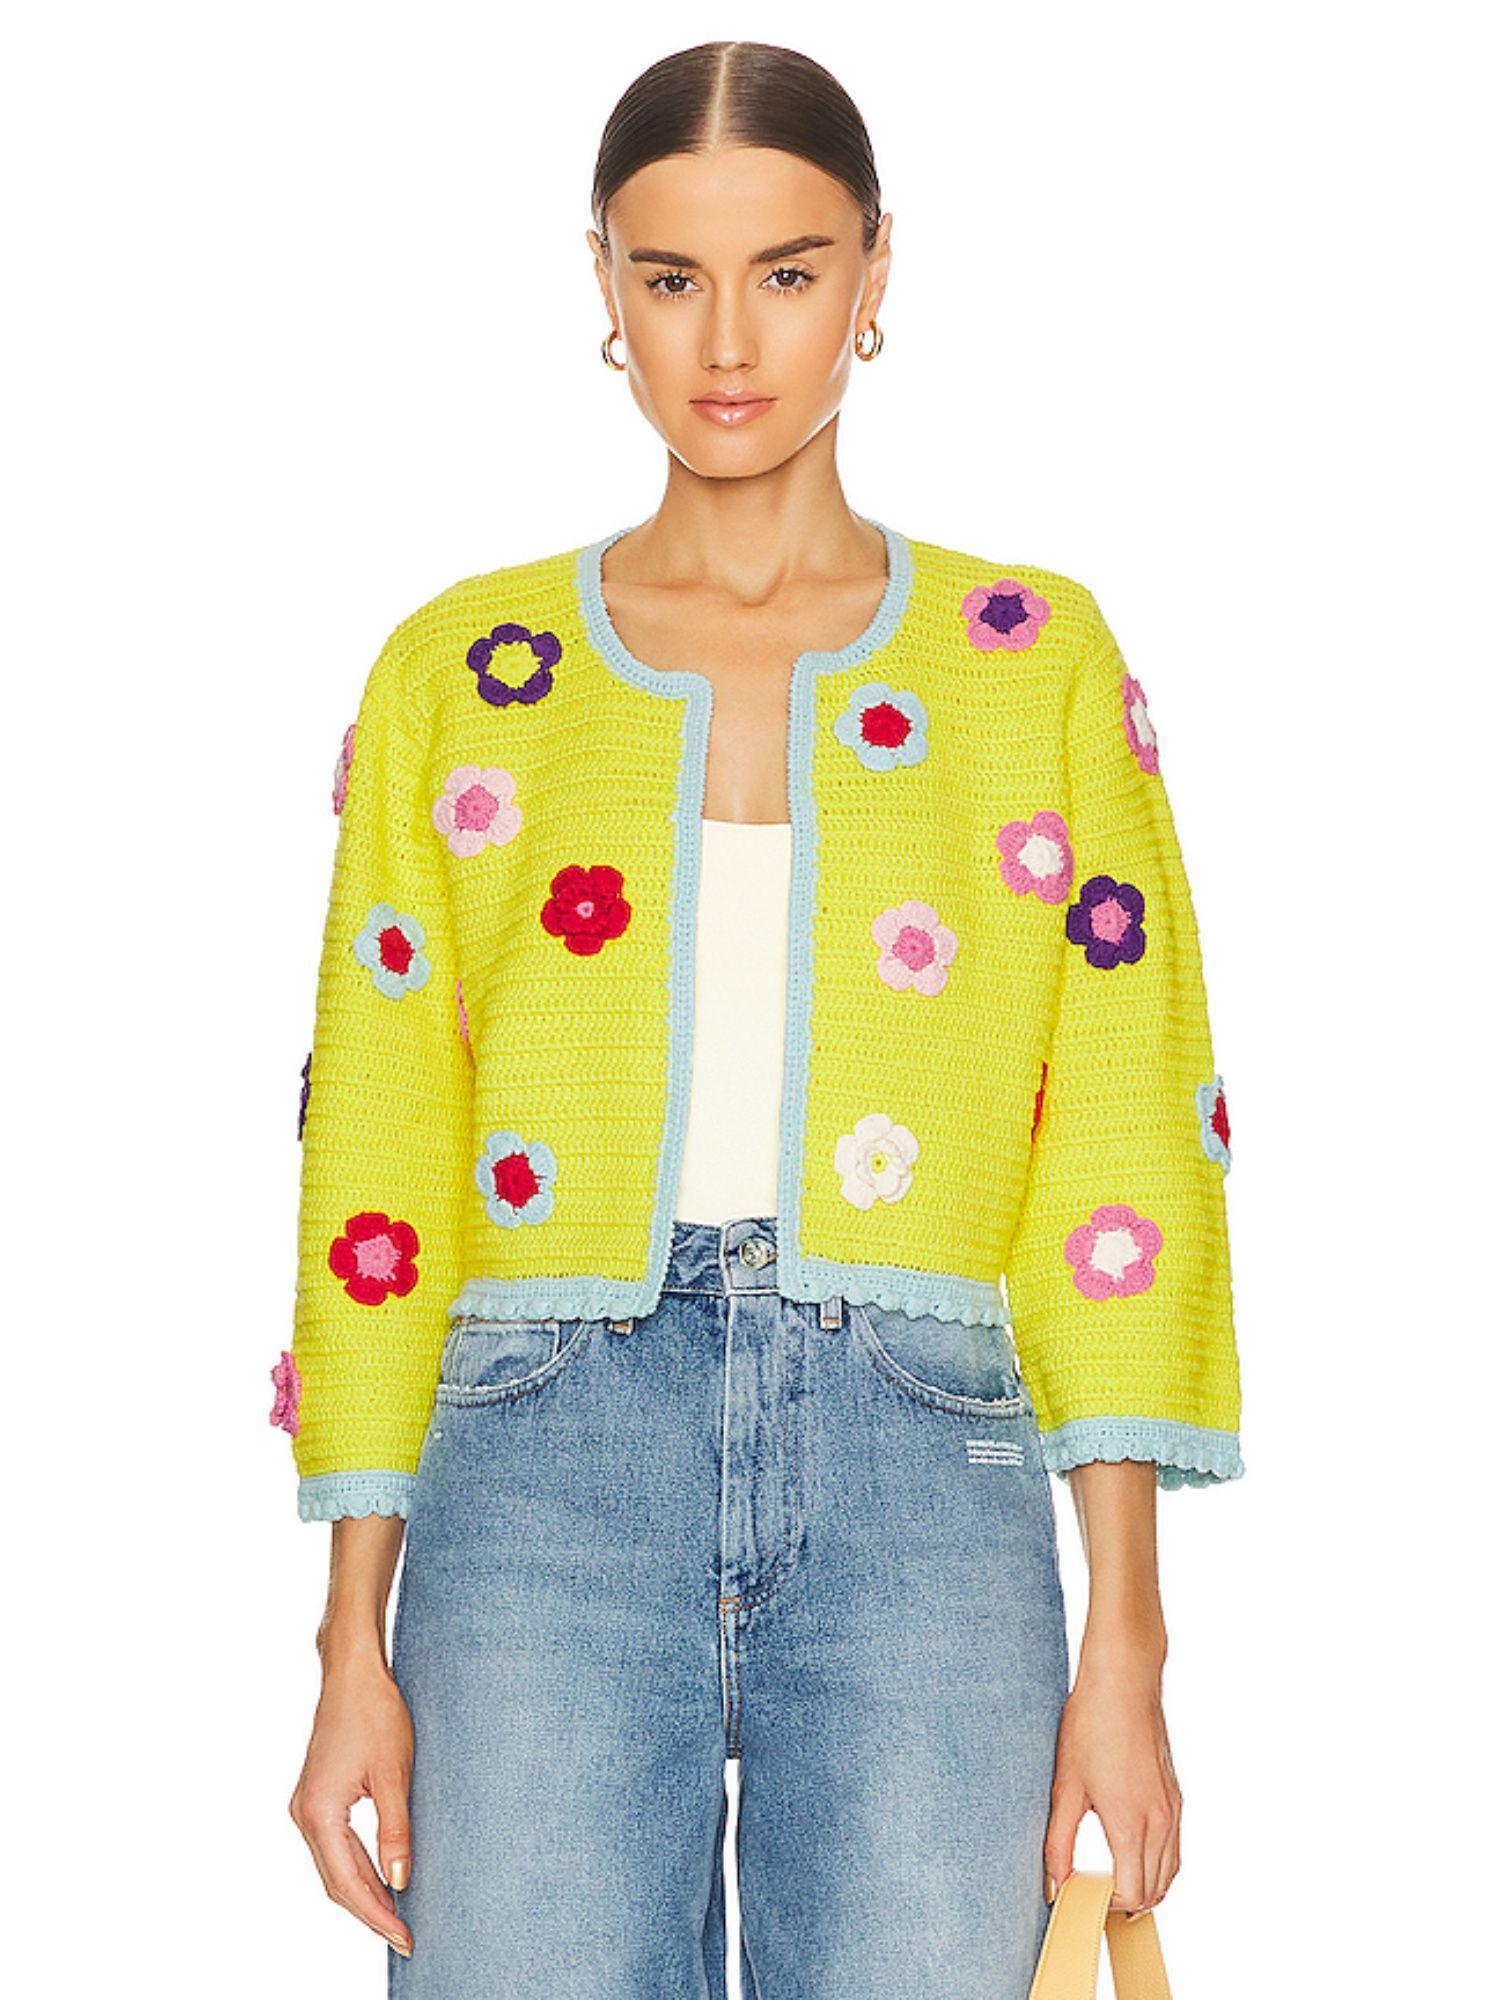 anderson flower crochet cardigan